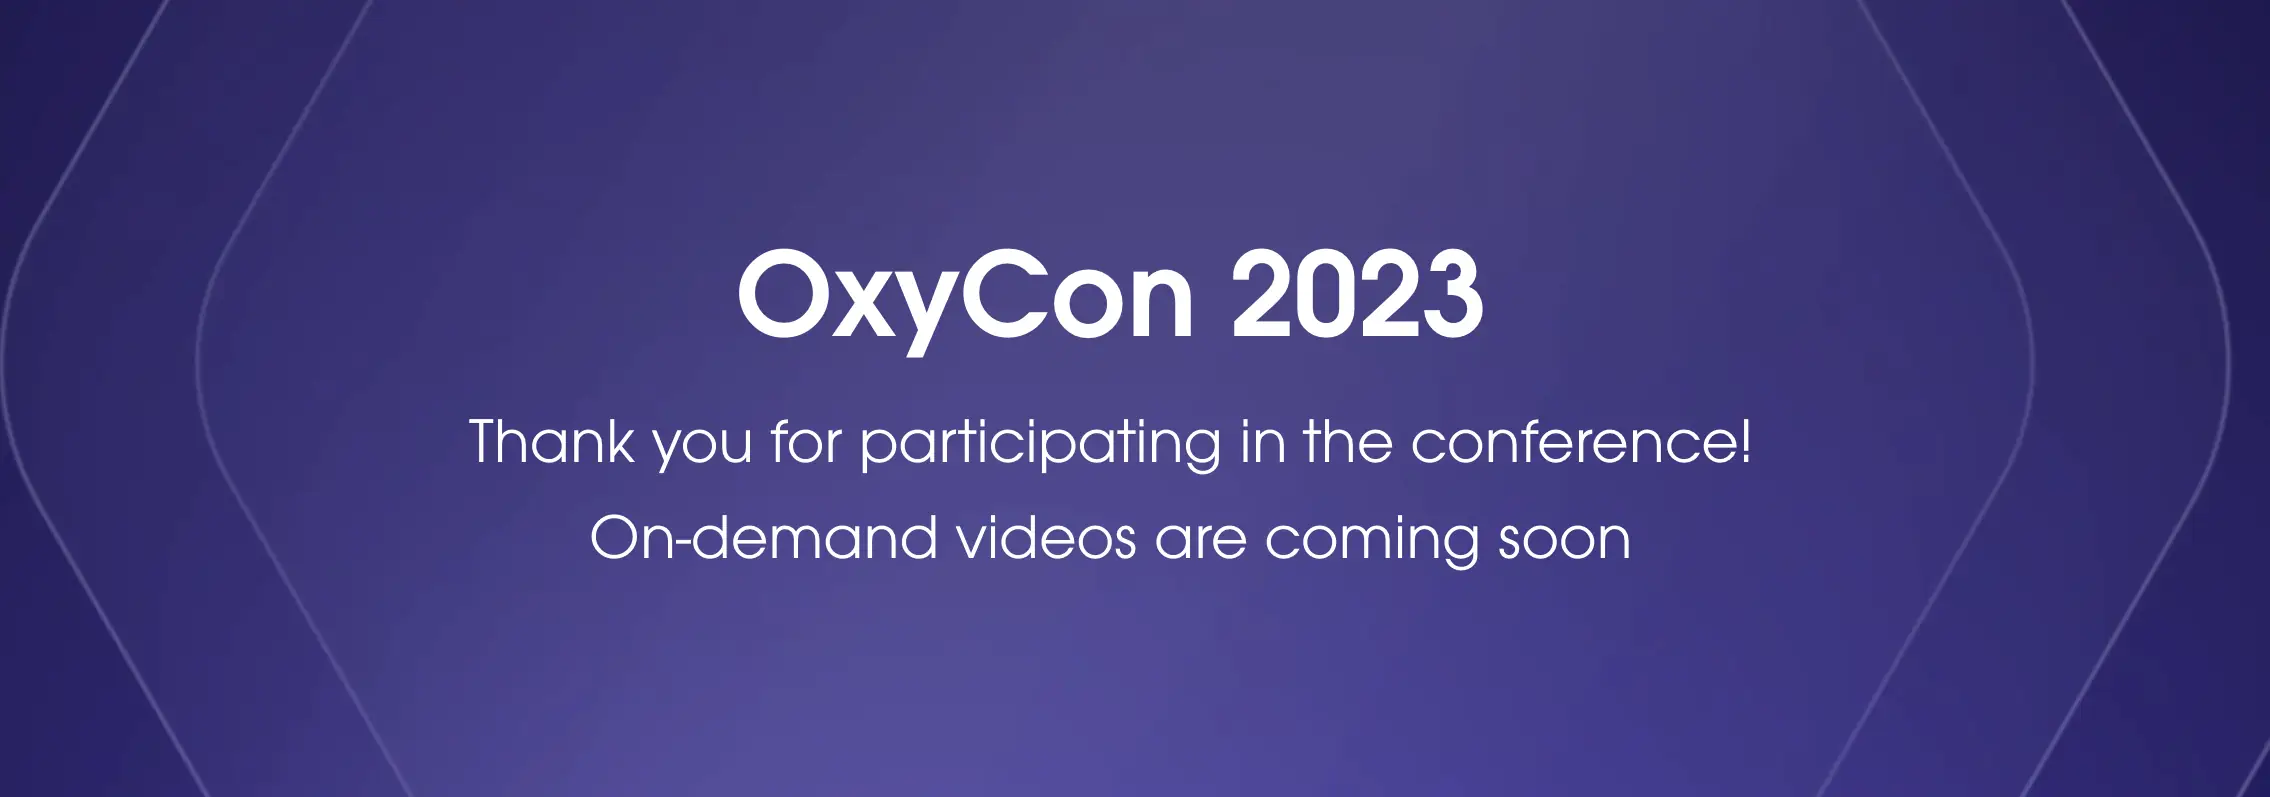 oxycon 2023 main image